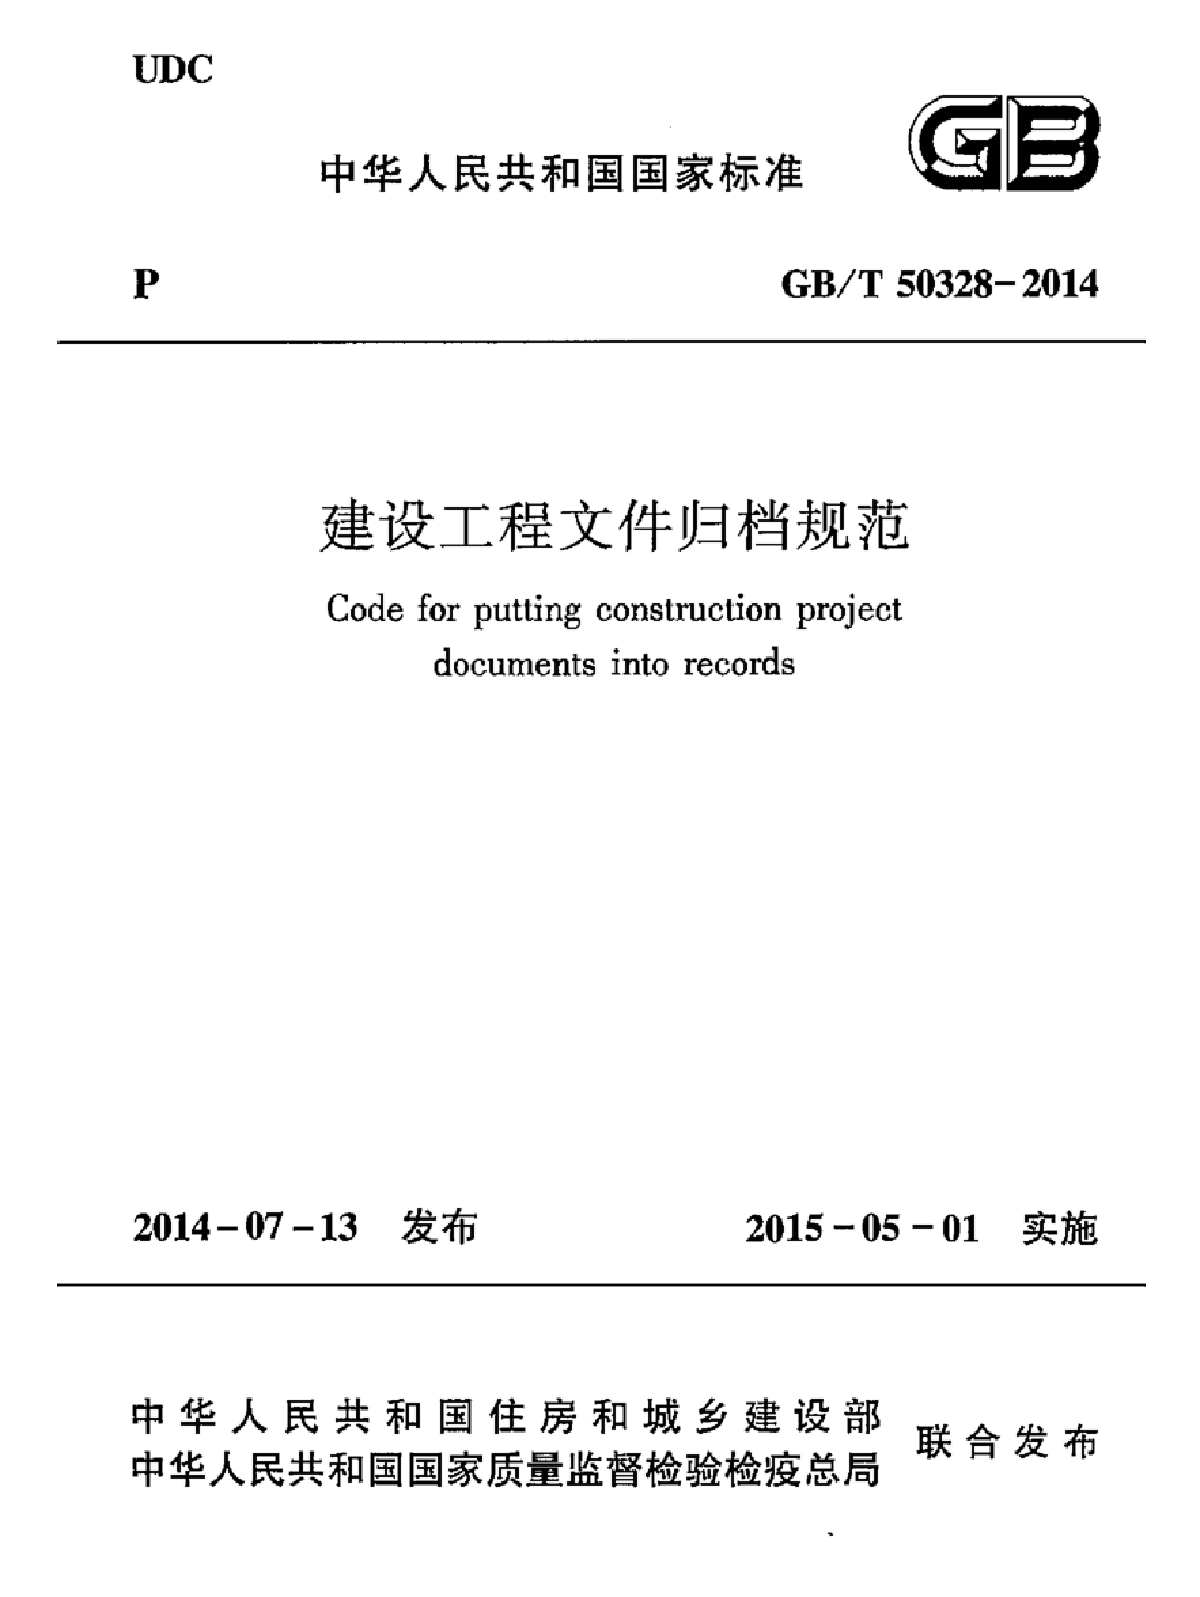 GB/T 50328-2014《建设工程文件归档规范》